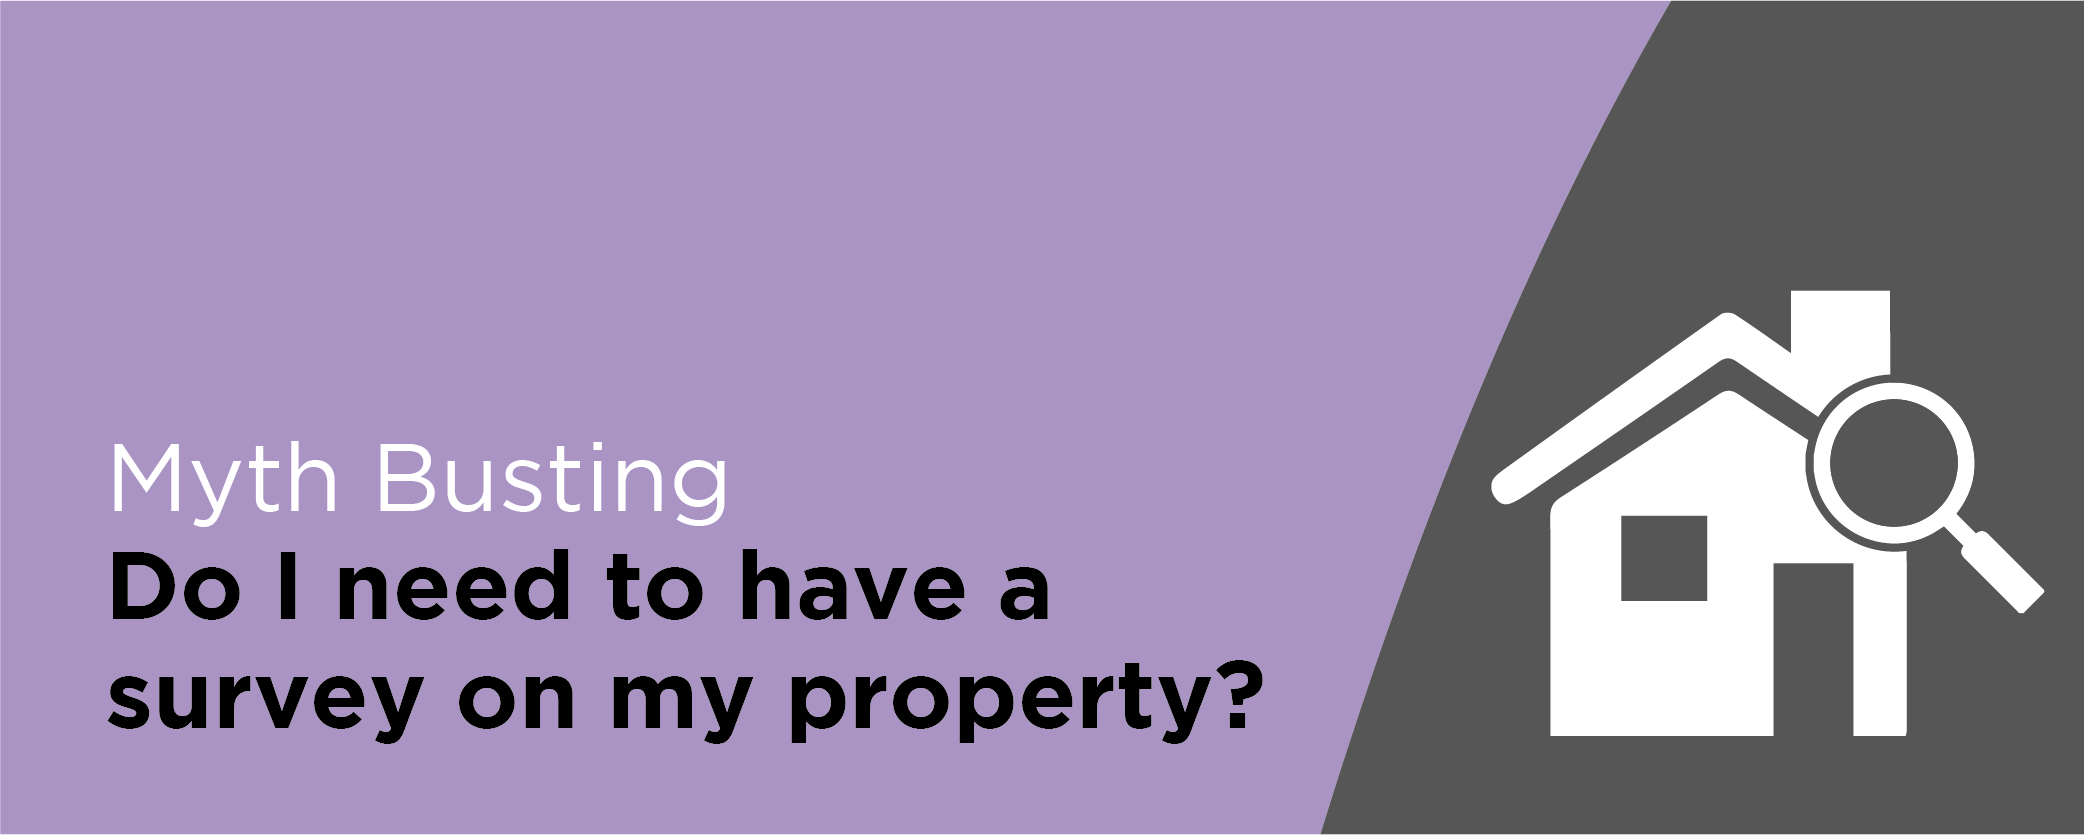 Myth Busting: Do I need to have a survey on my property?